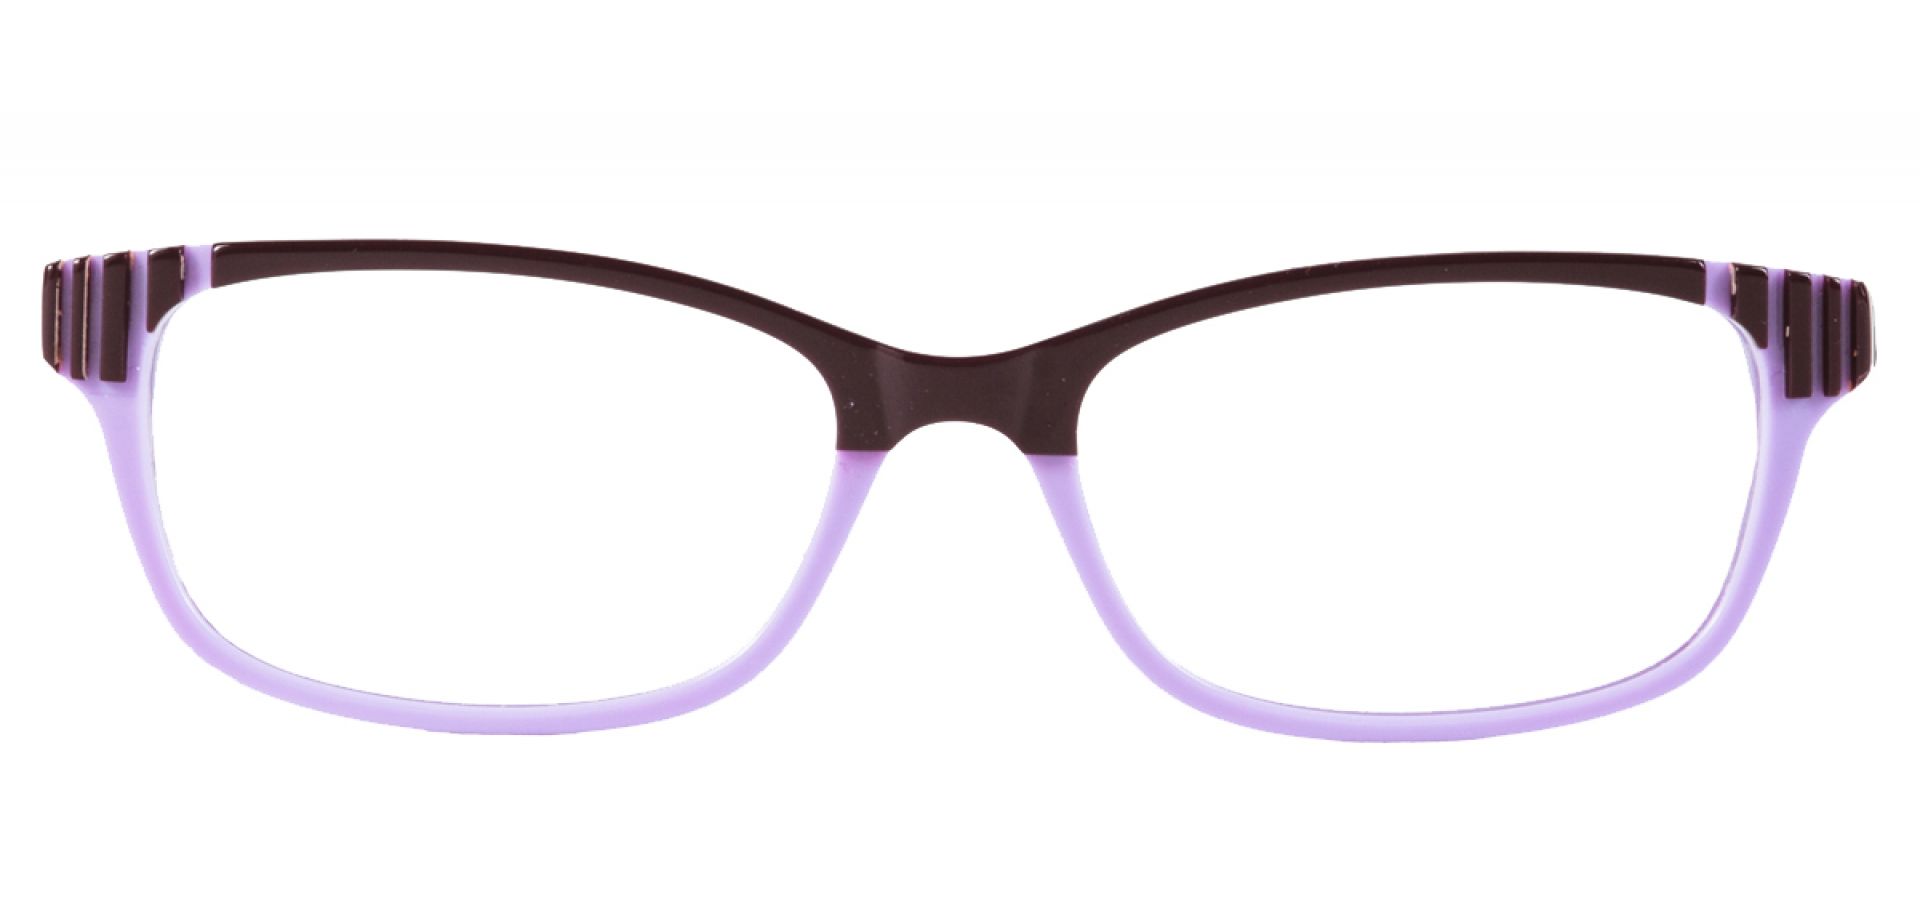 Dioptrijske naočale Ghetaldus NAOČALE ZA RAČUNALO GHK103: Boja: Purple, Veličina: 47/15/123, Spol: dječje, Materijal: acetat